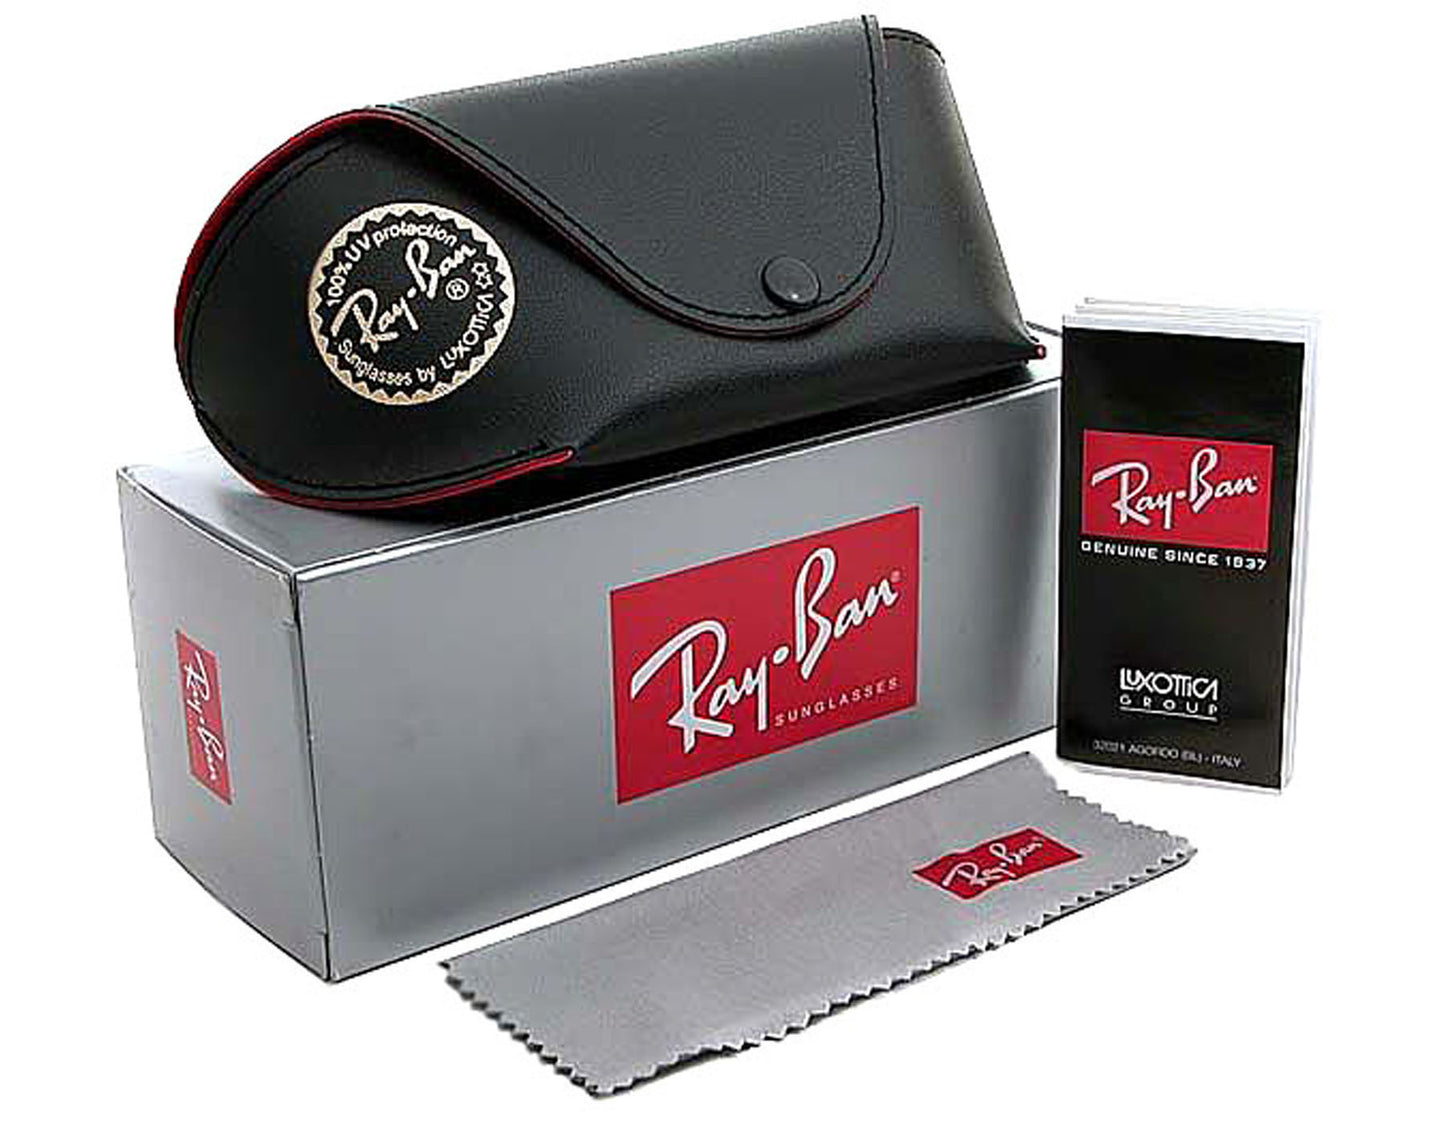 Ray Ban RB4376-647711-57  New Sunglasses